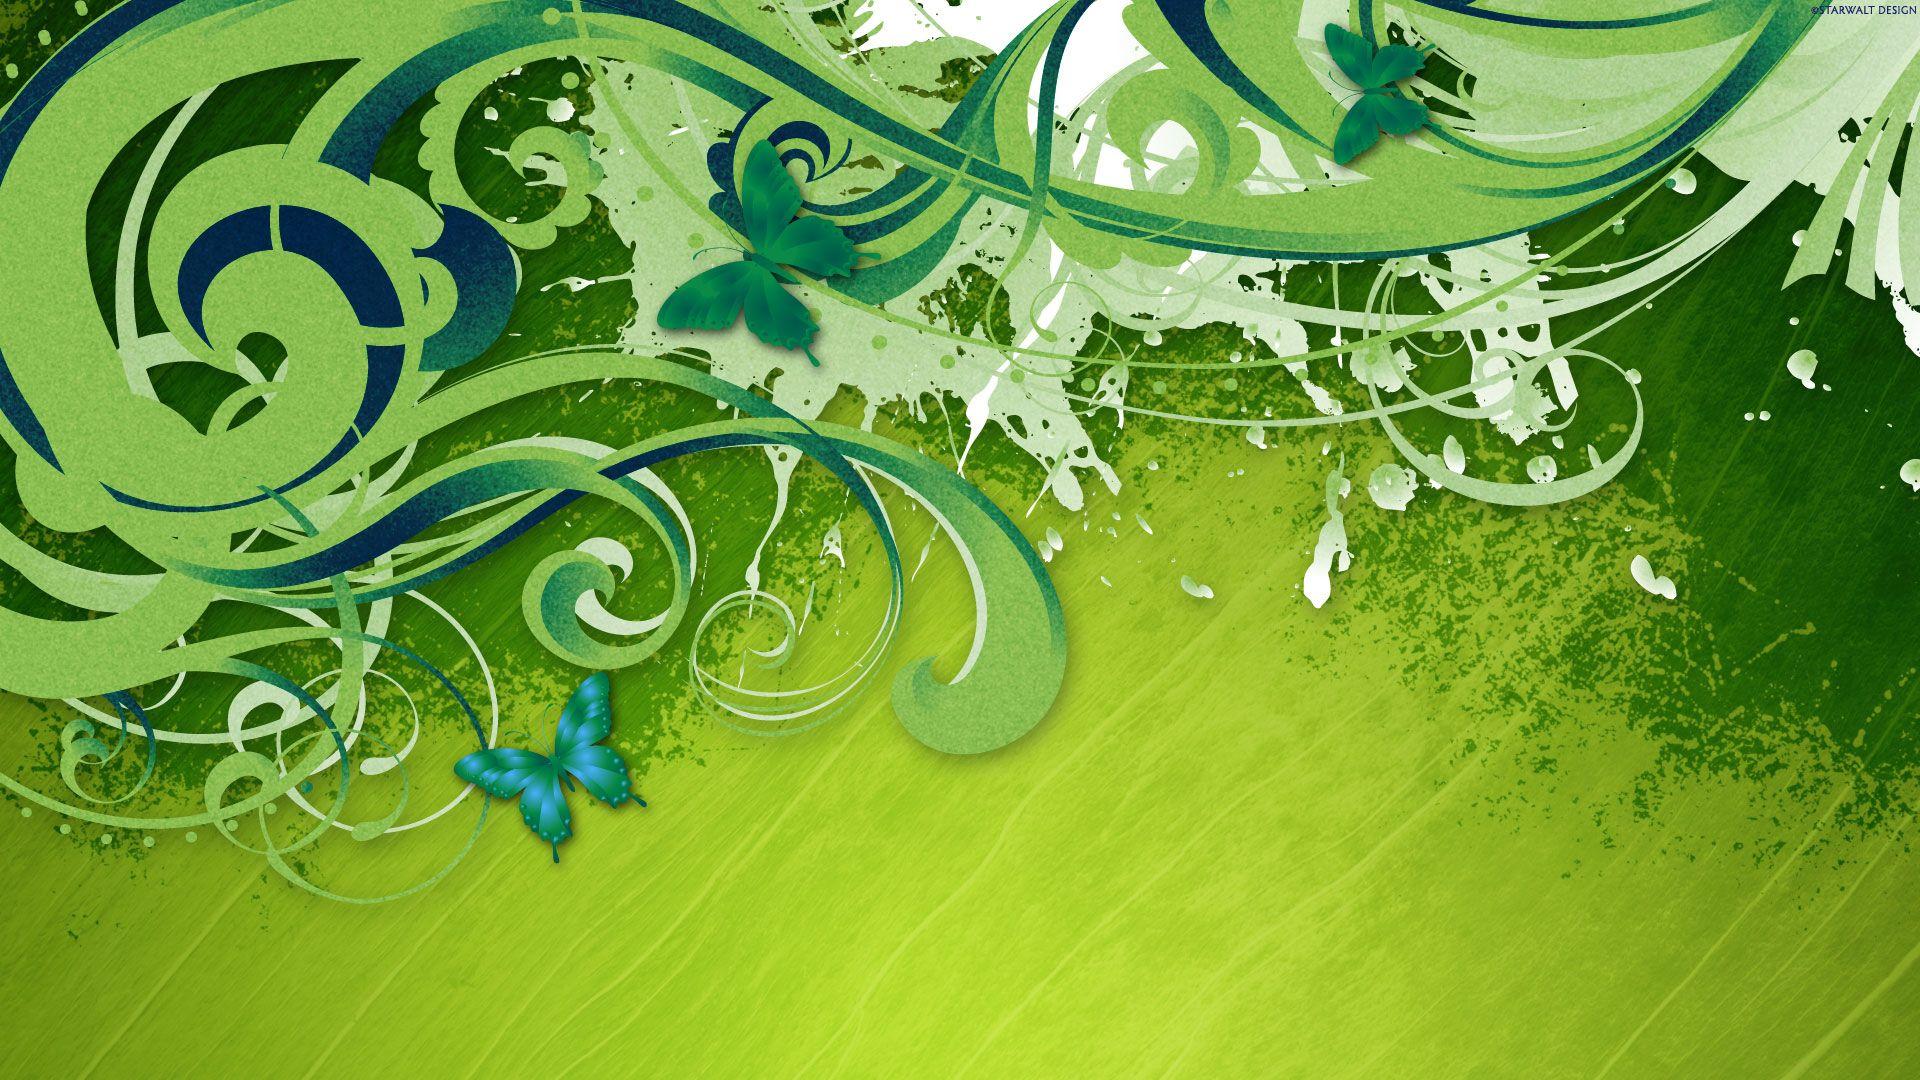 hd wallpaper green background